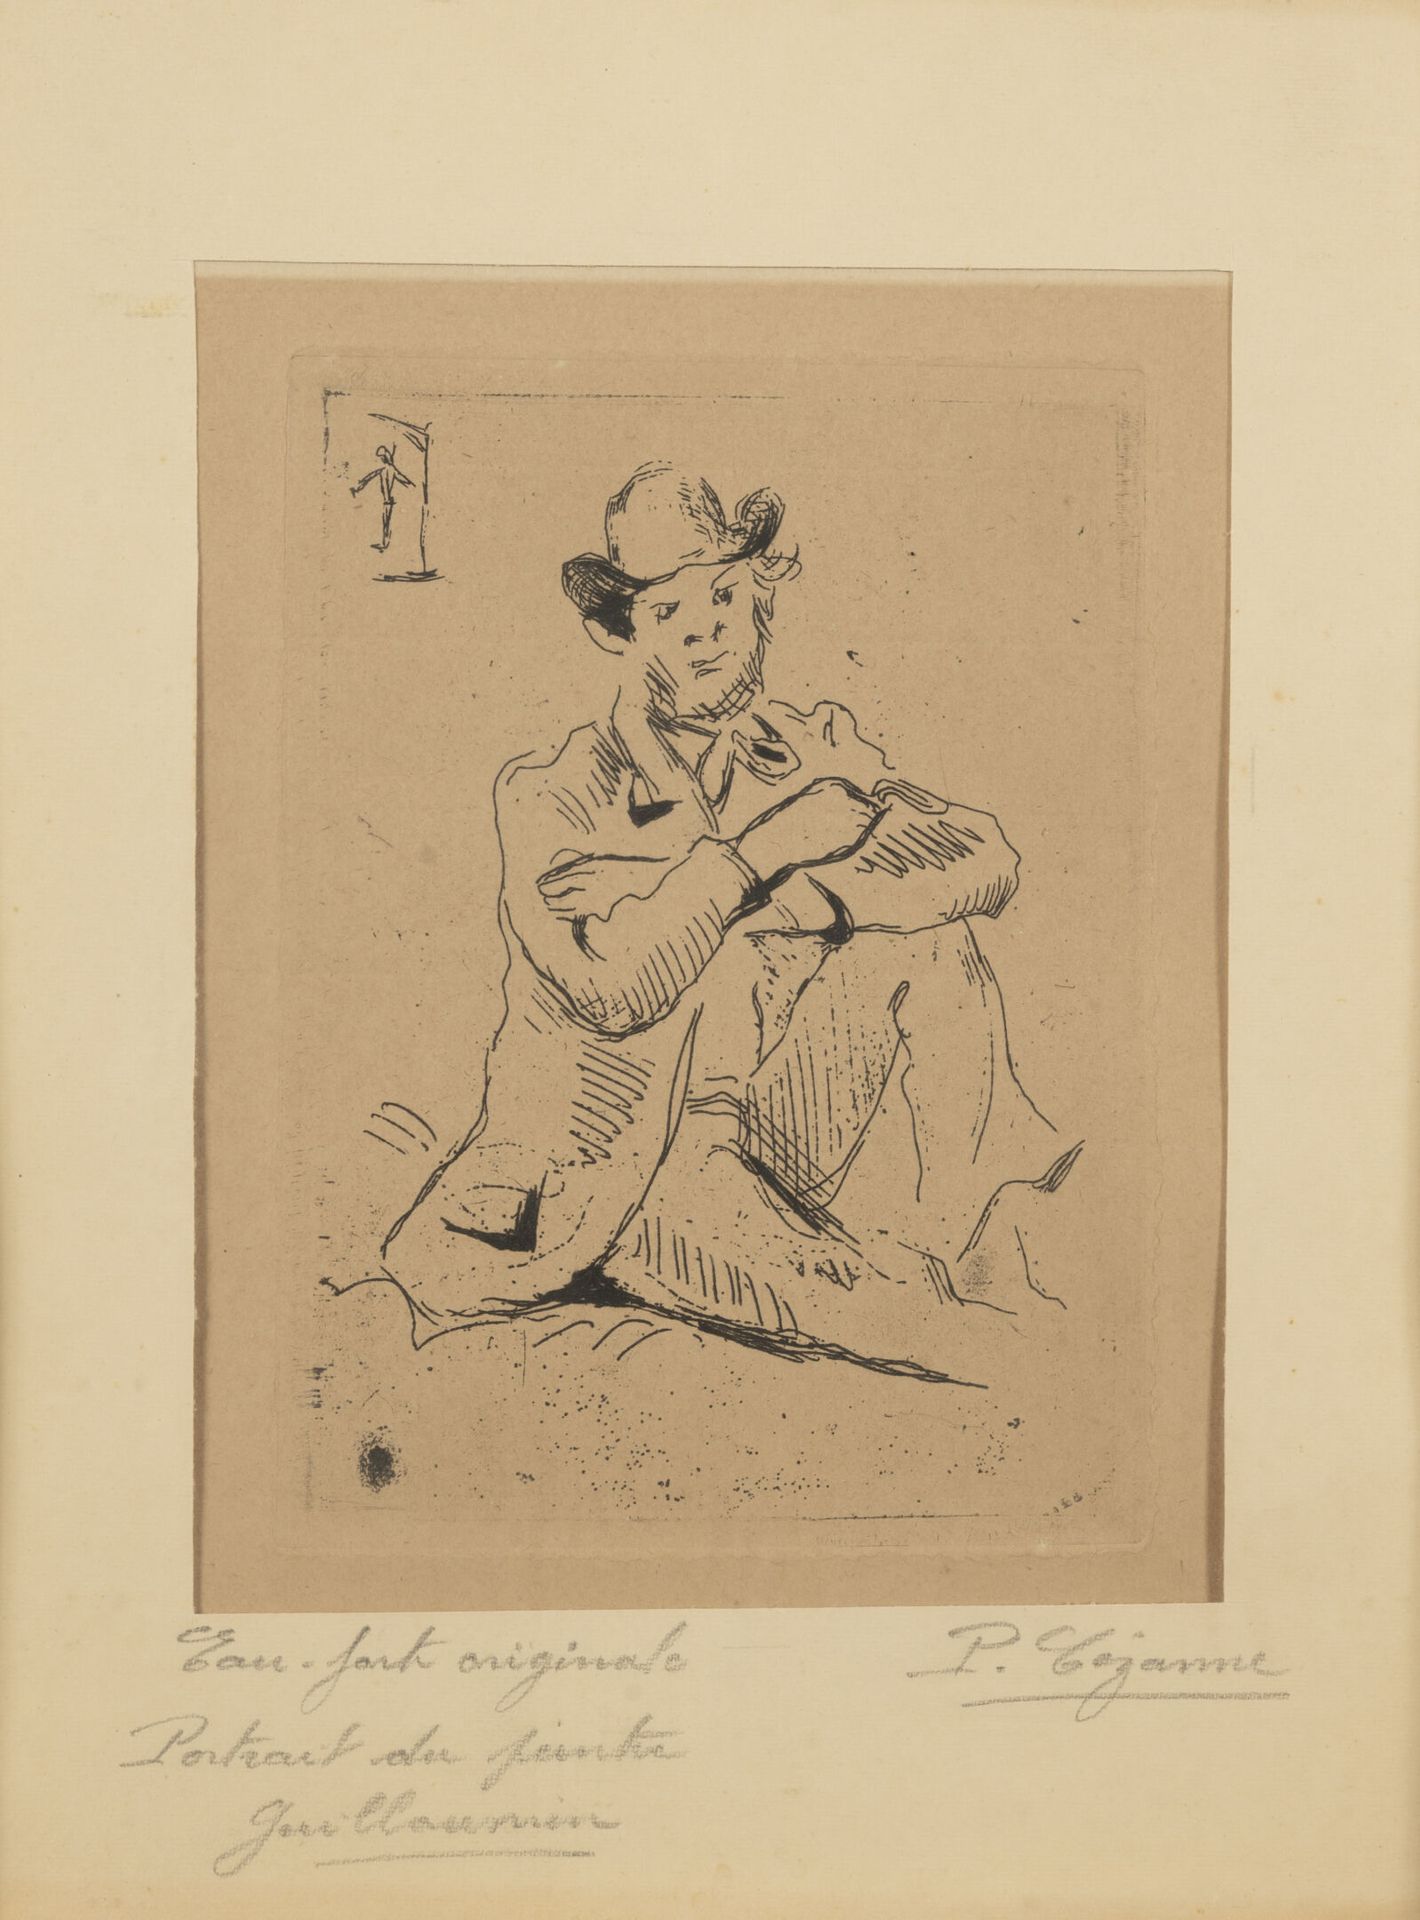 D'après Paul CEZANNE (1839-1906) Retrato del pintor Guillaumin con el ahorcado.
&hellip;